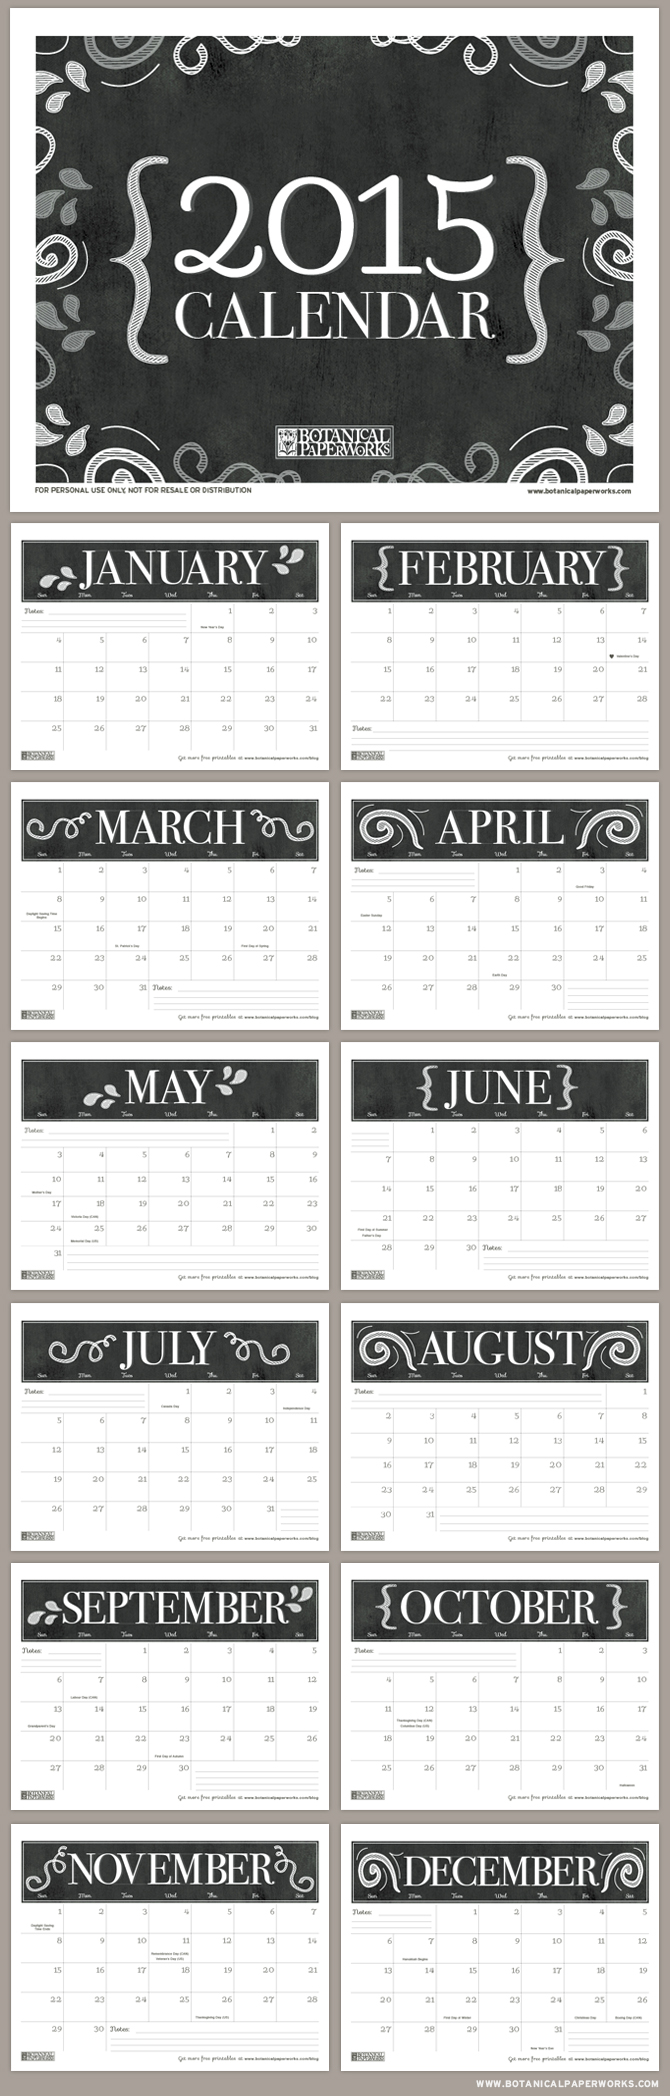 Free Printable Calendar Template 2016 from www.botanicalpaperworks.com